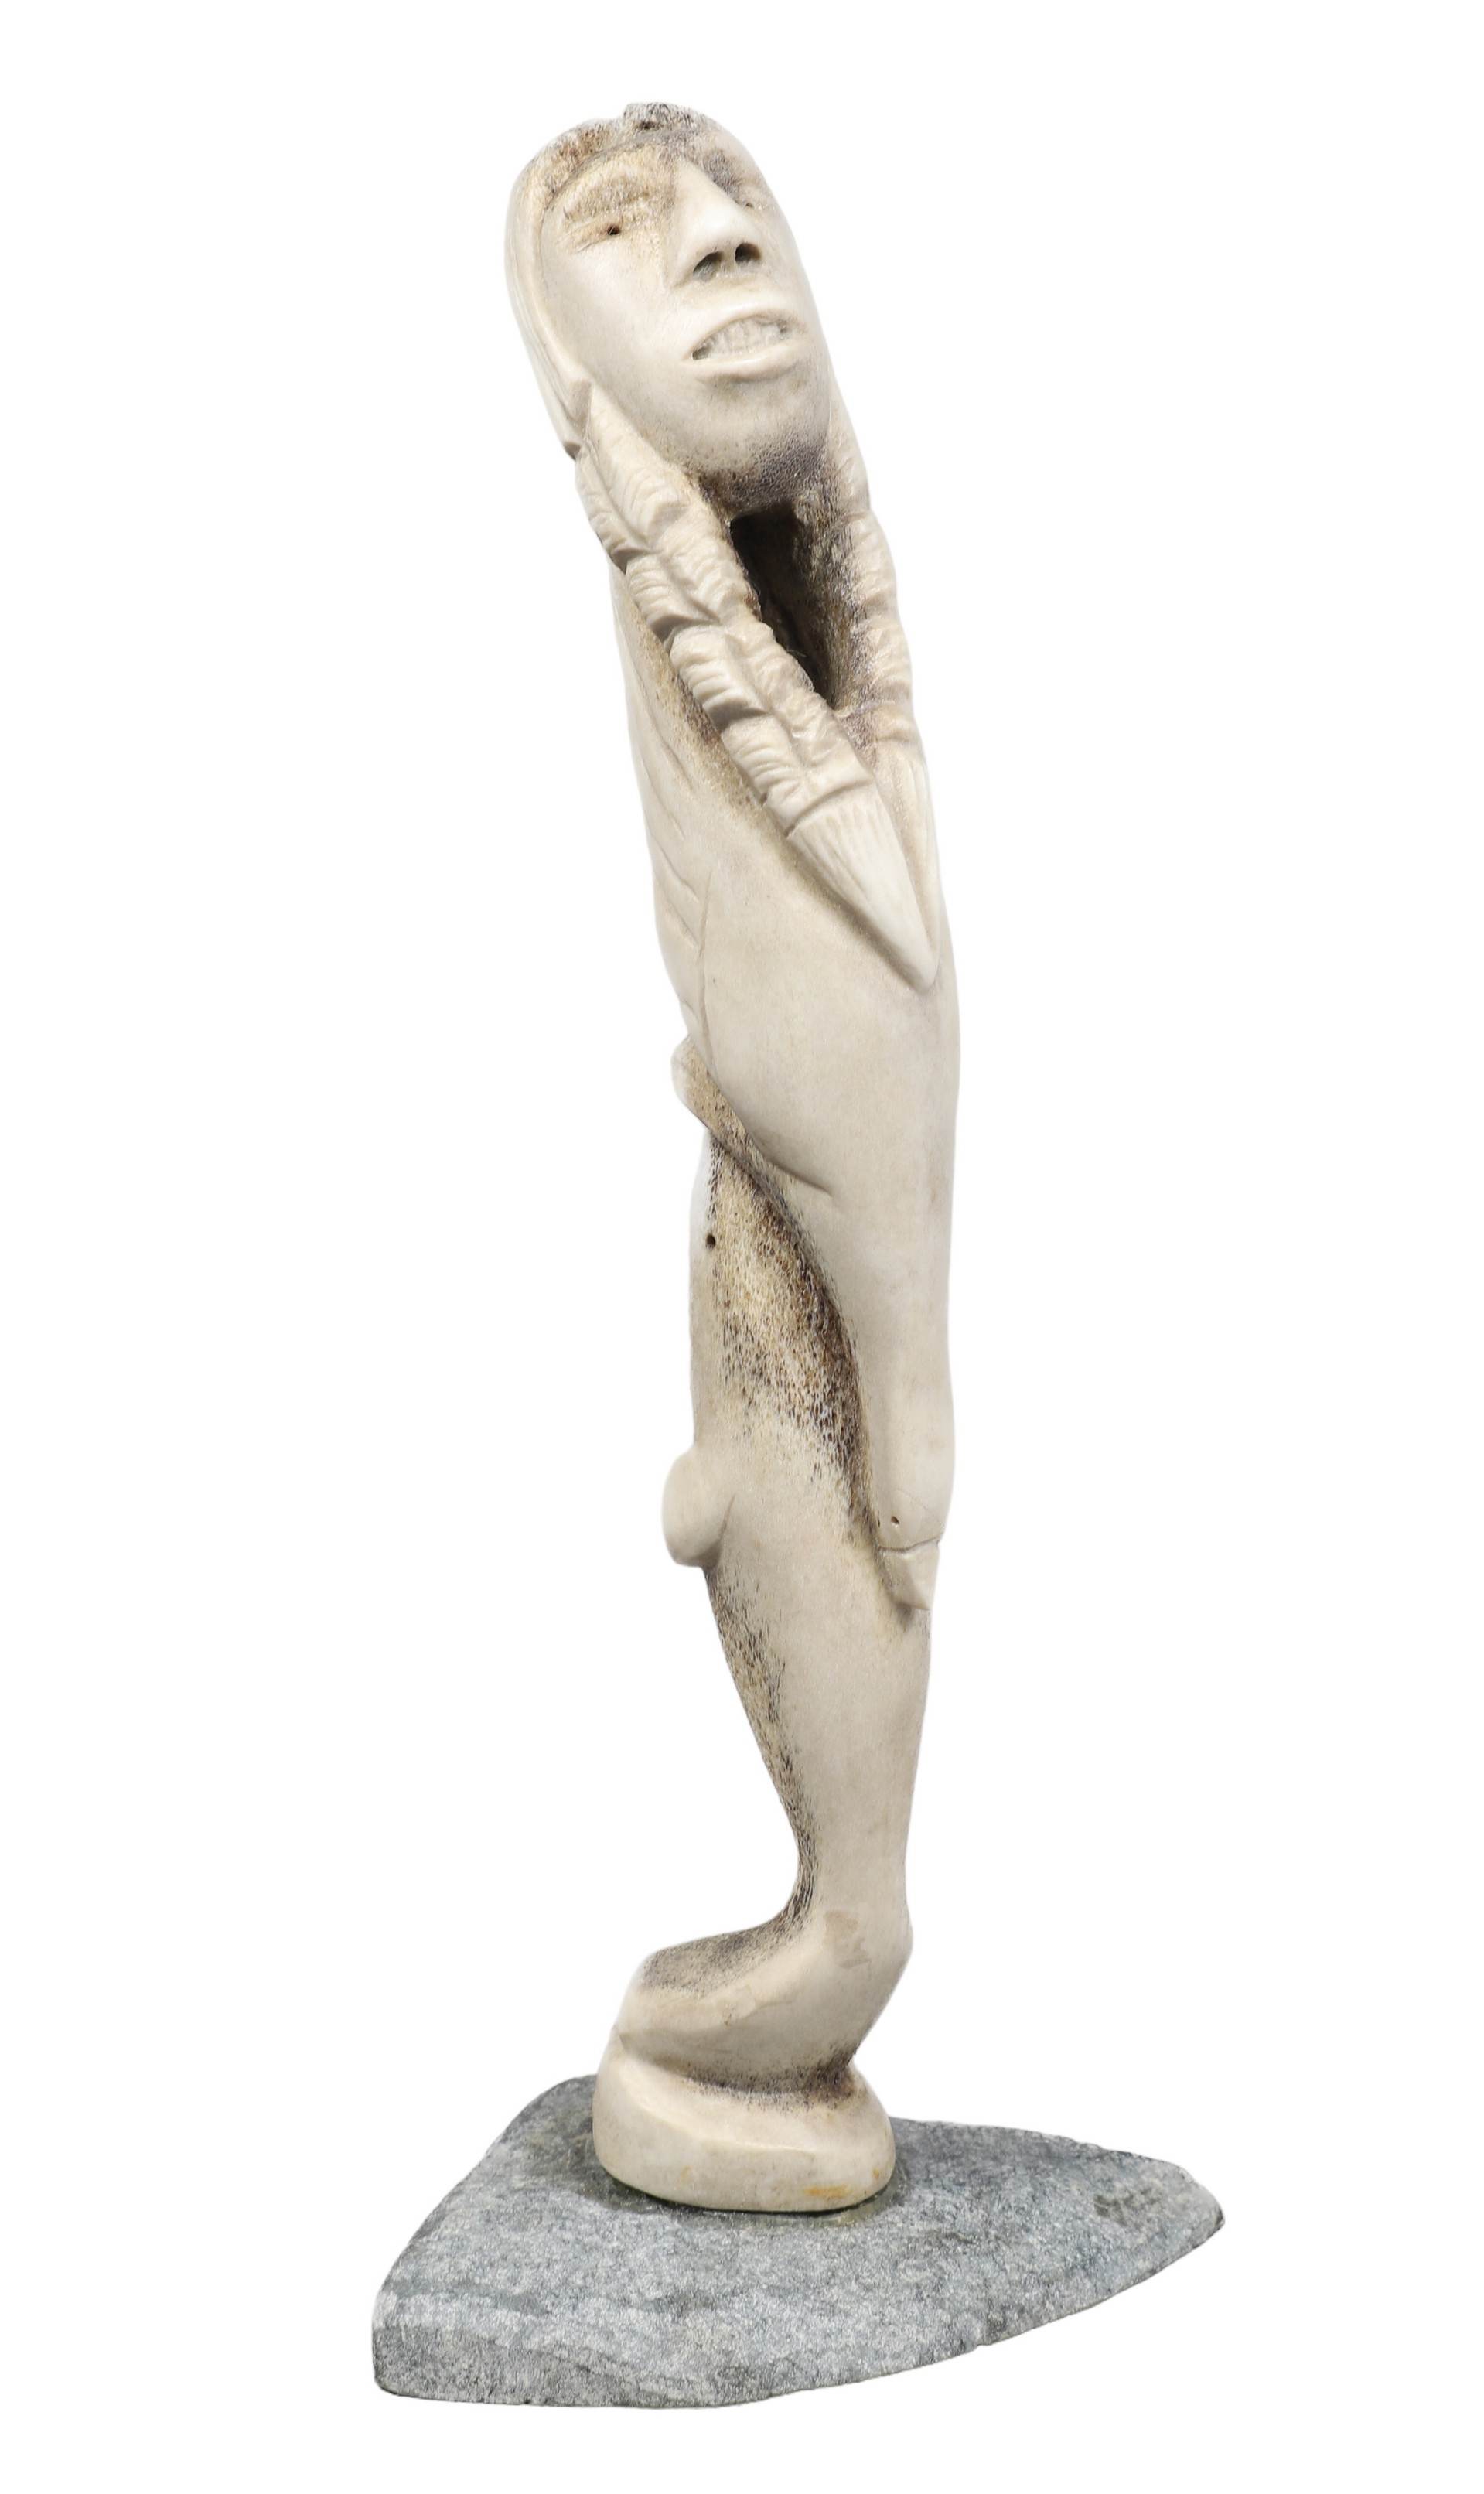 Whale vertebrae carving depicting 2e11d4